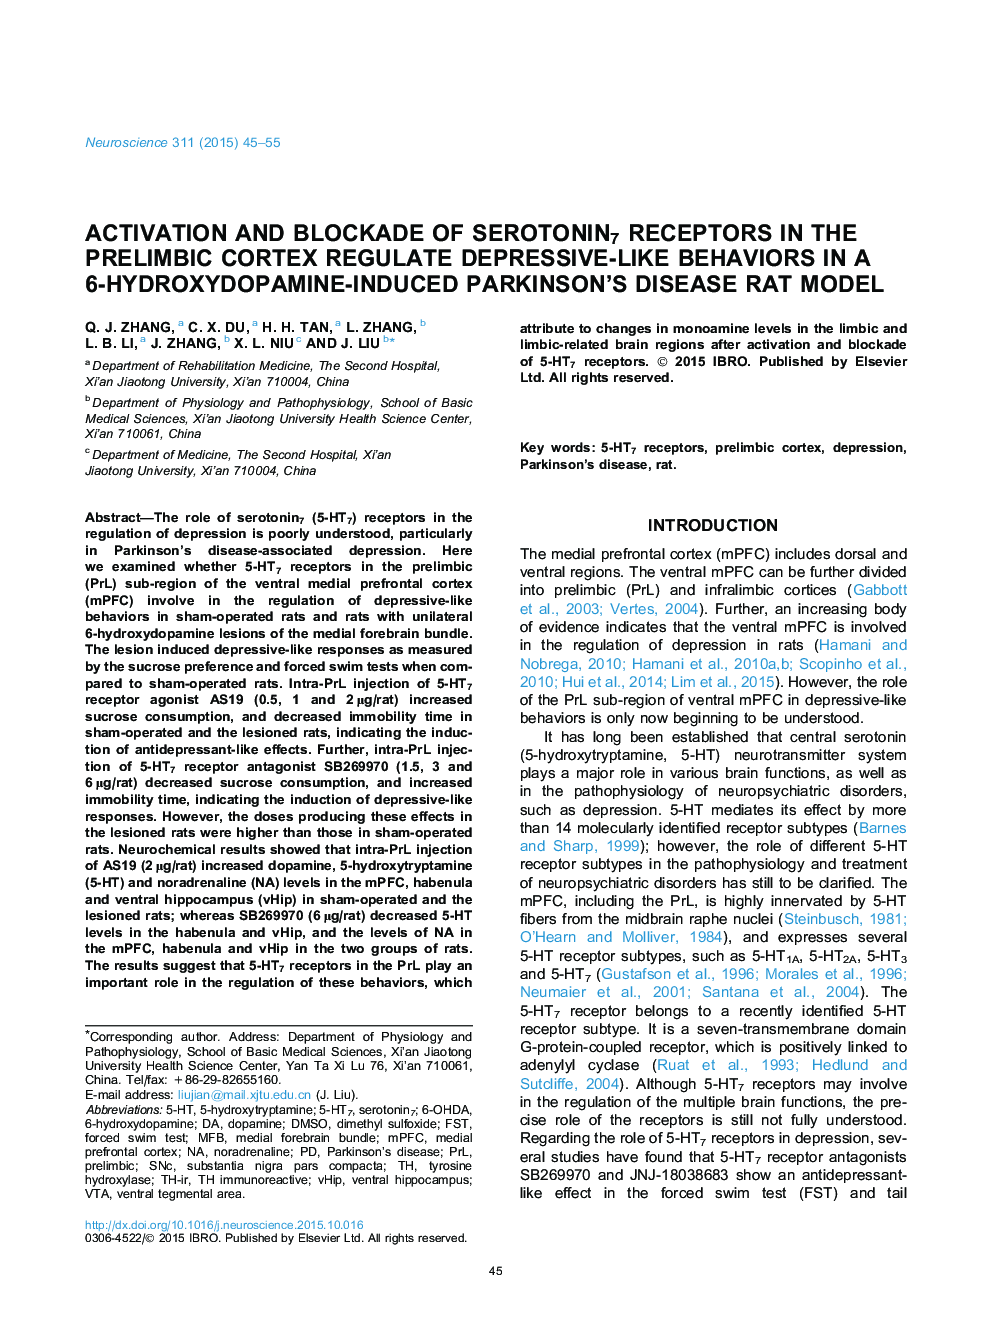 Activation and blockade of serotonin7 receptors in the prelimbic cortex regulate depressive-like behaviors in a 6-hydroxydopamine-induced Parkinson's disease rat model